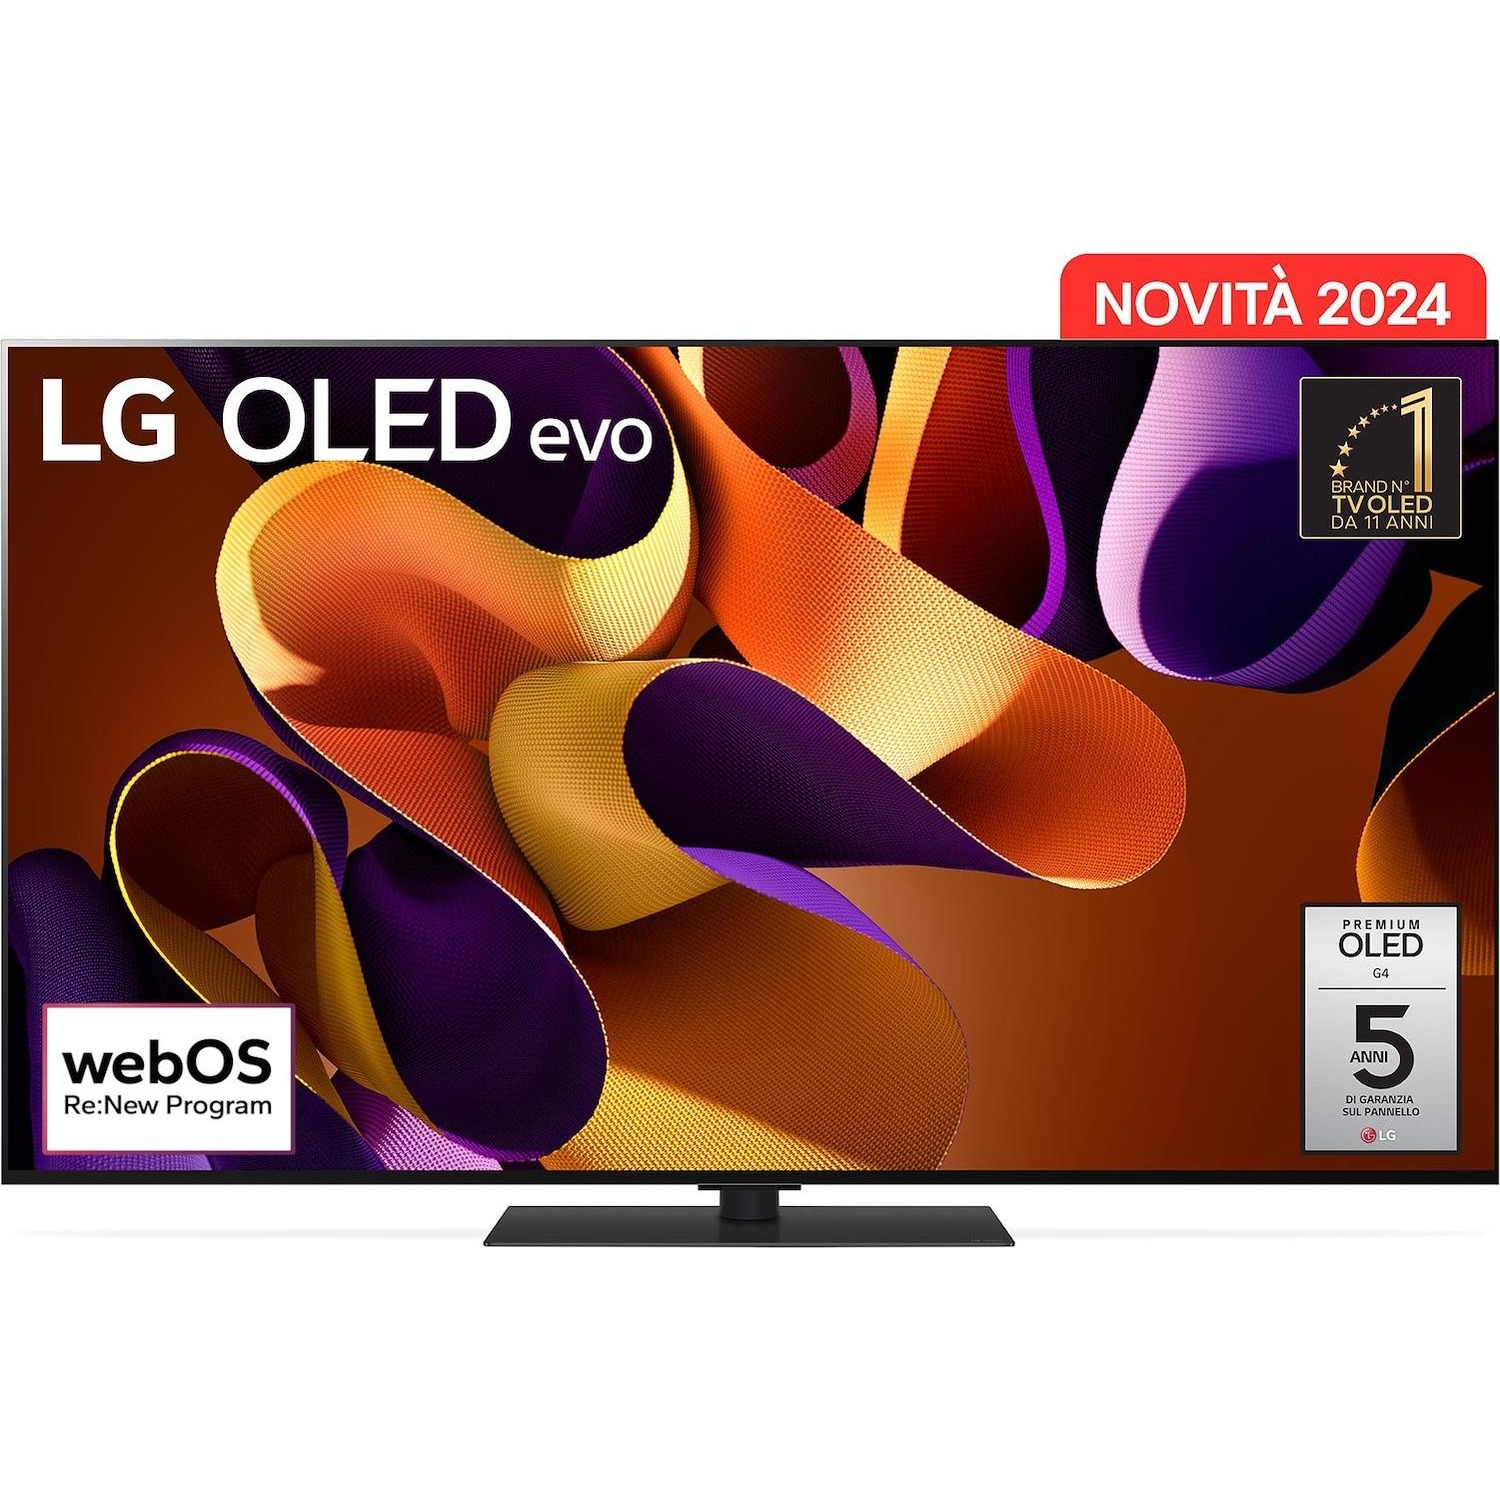 Immagine per TV OLED LG OLED65G46 Calibrato 4K e FULL HD da DIMOStore